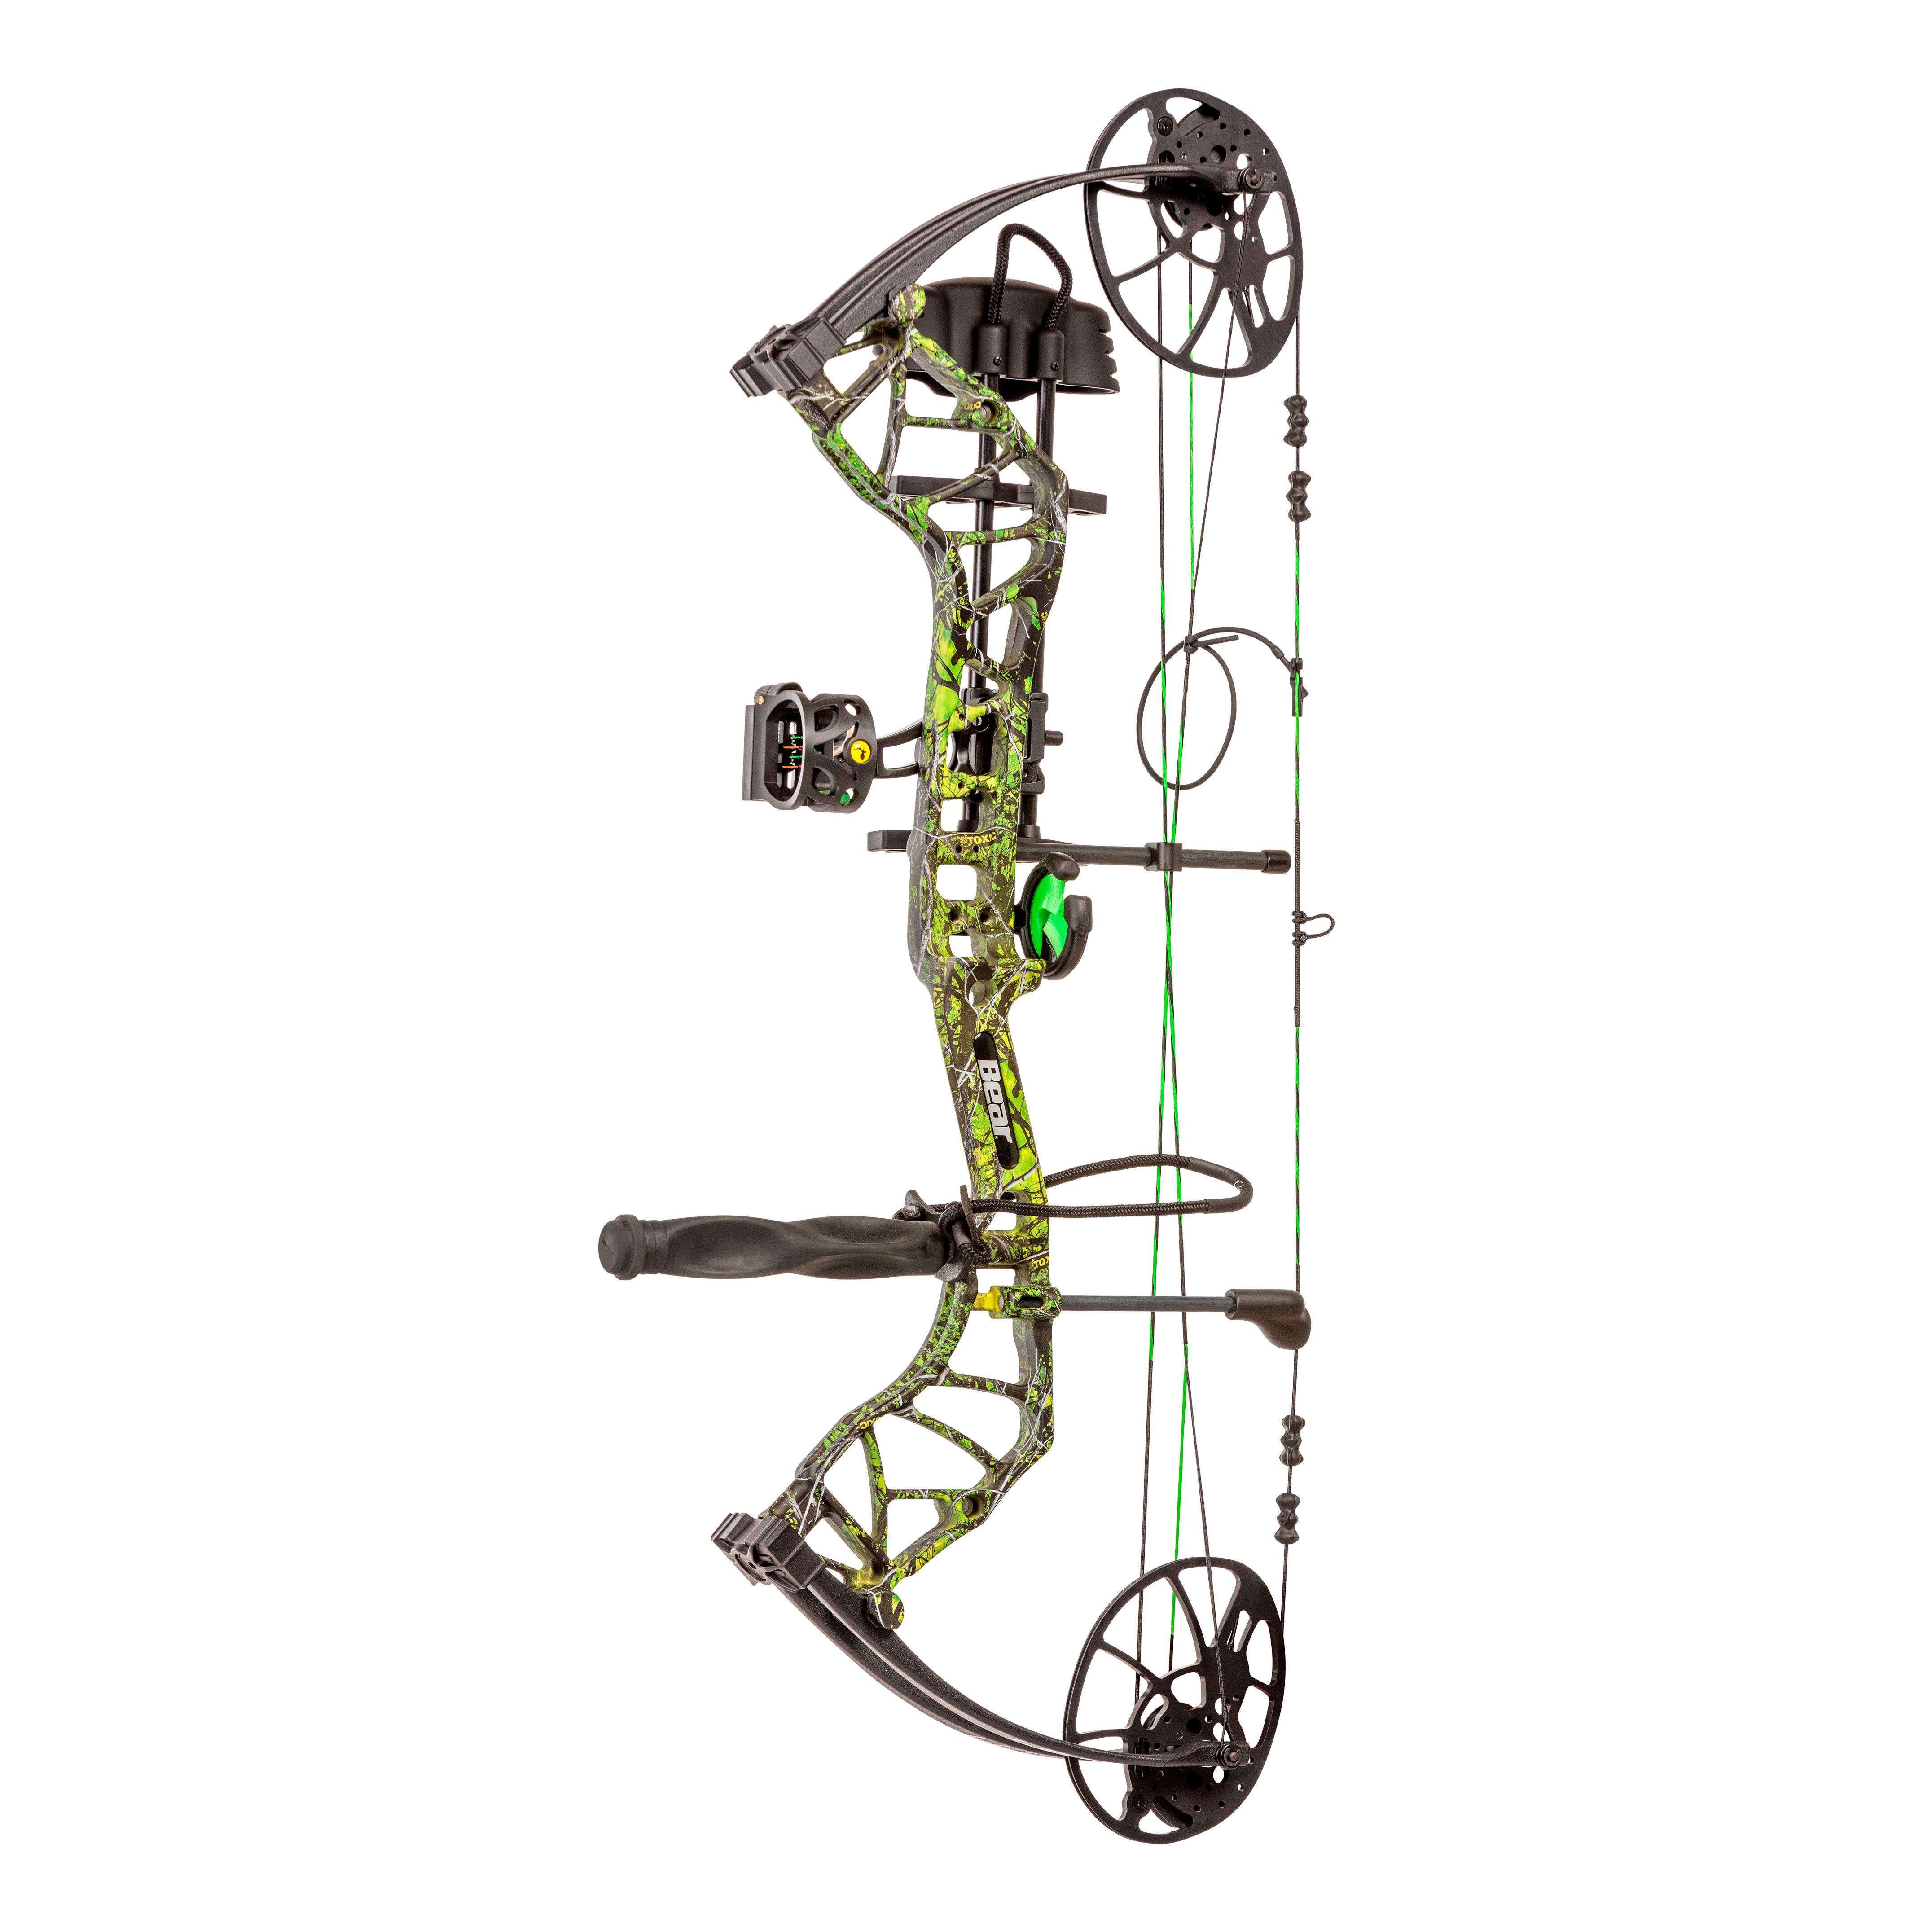 Bear® Archery Legit Compound Bow Package - Toxic Camo